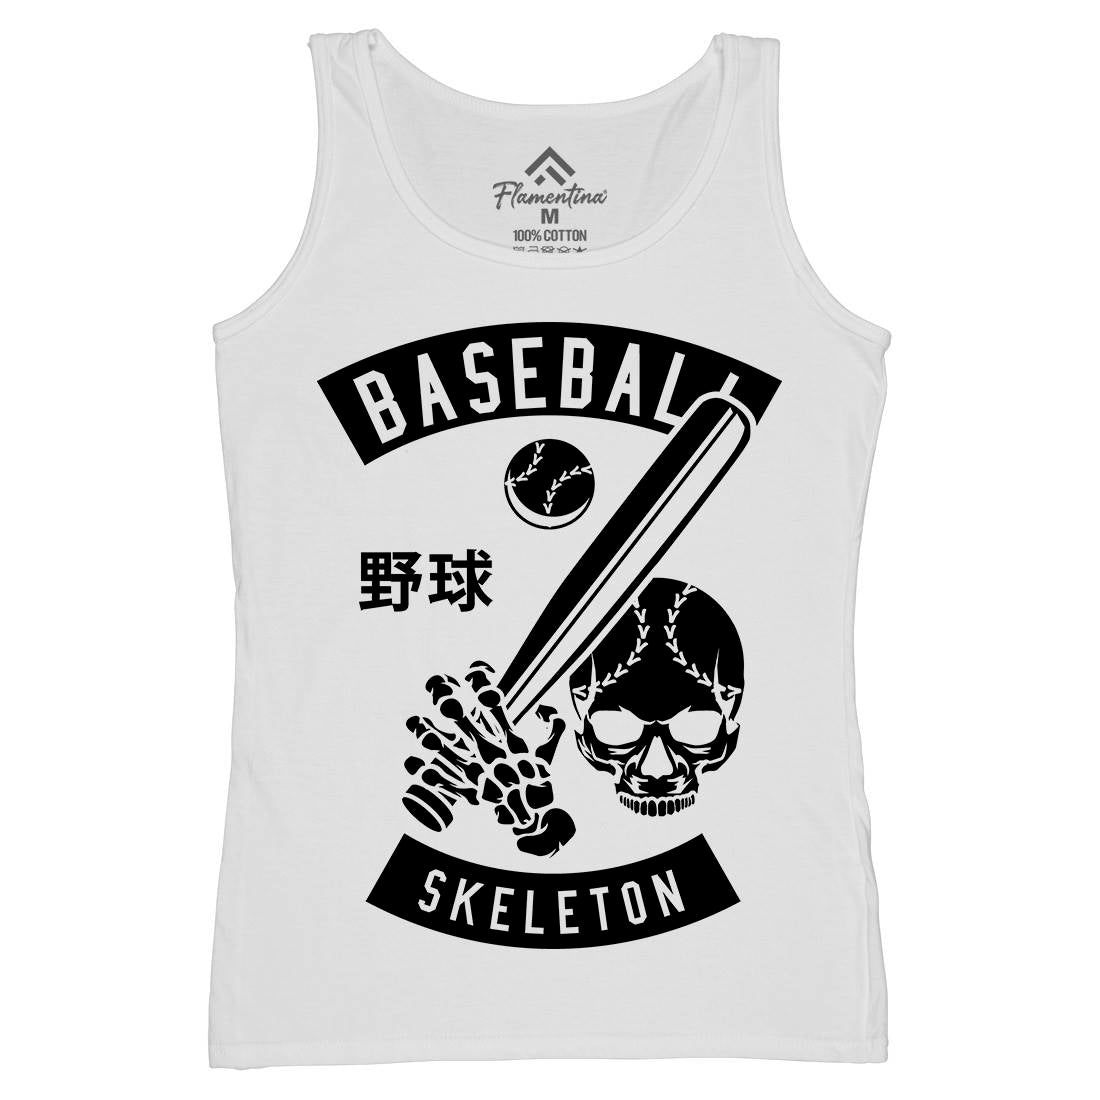 Baseball Skeleton Womens Organic Tank Top Vest Sport B489